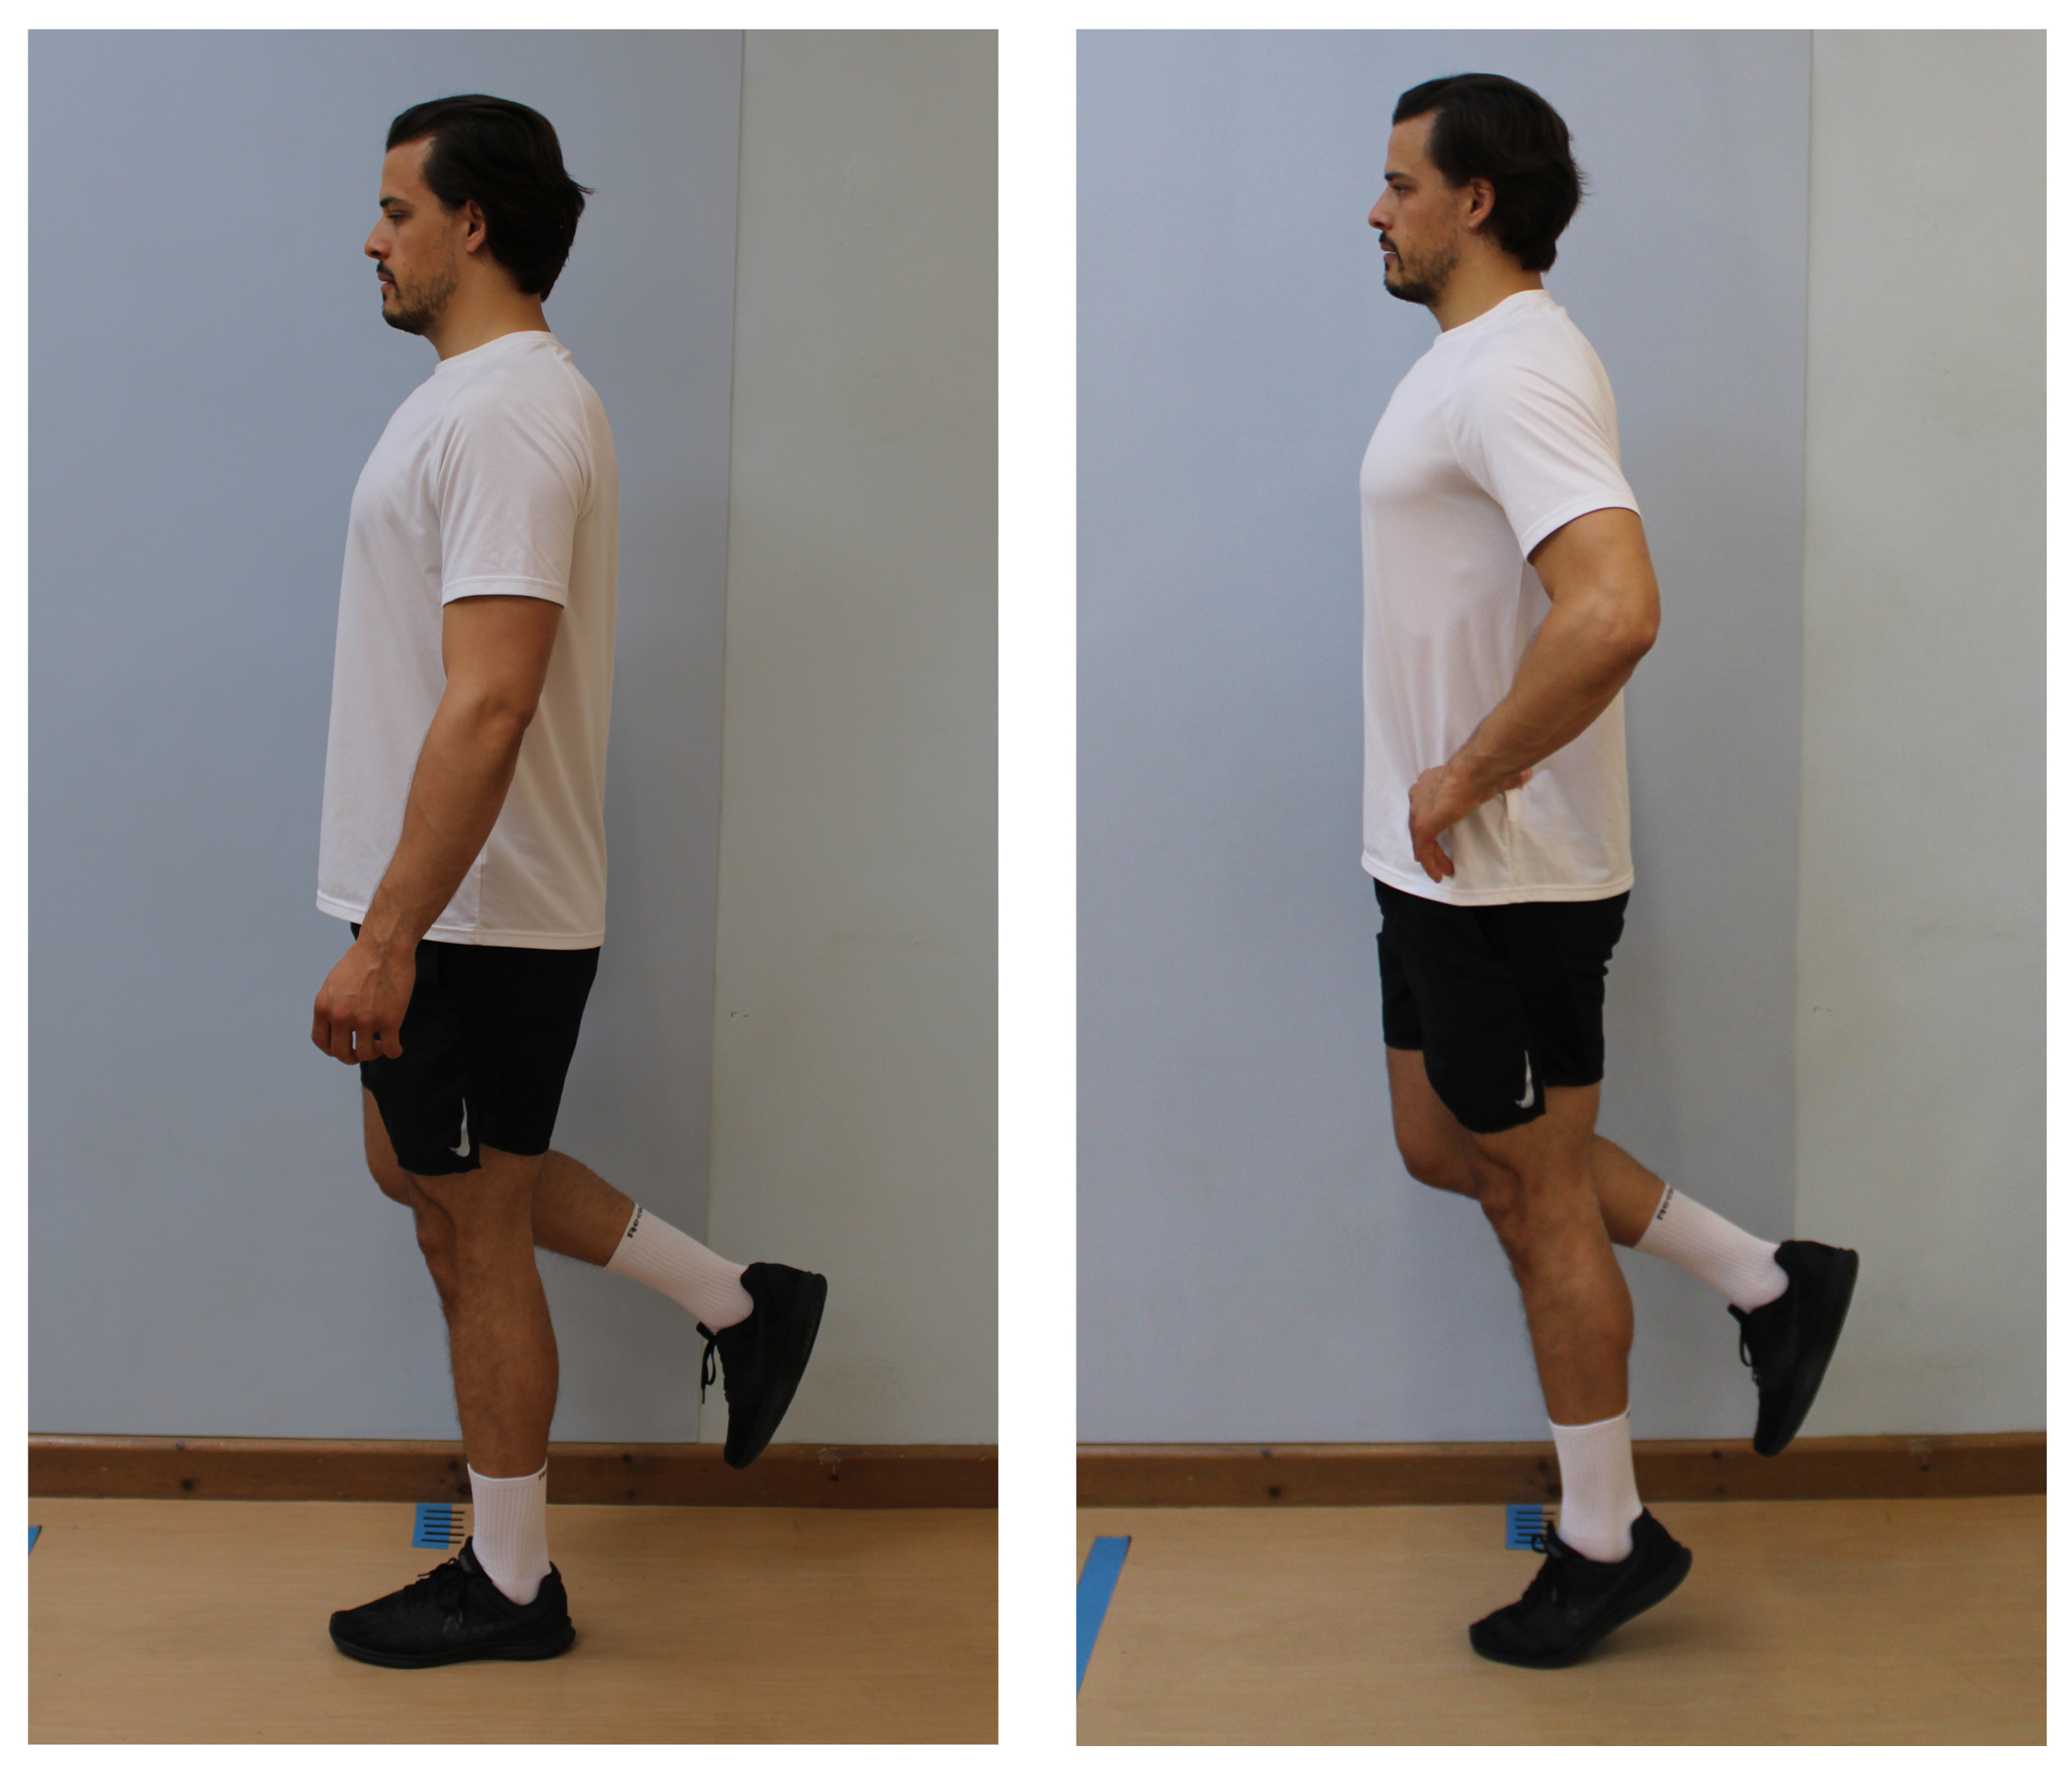 Single-leg heel raise: progression exercise